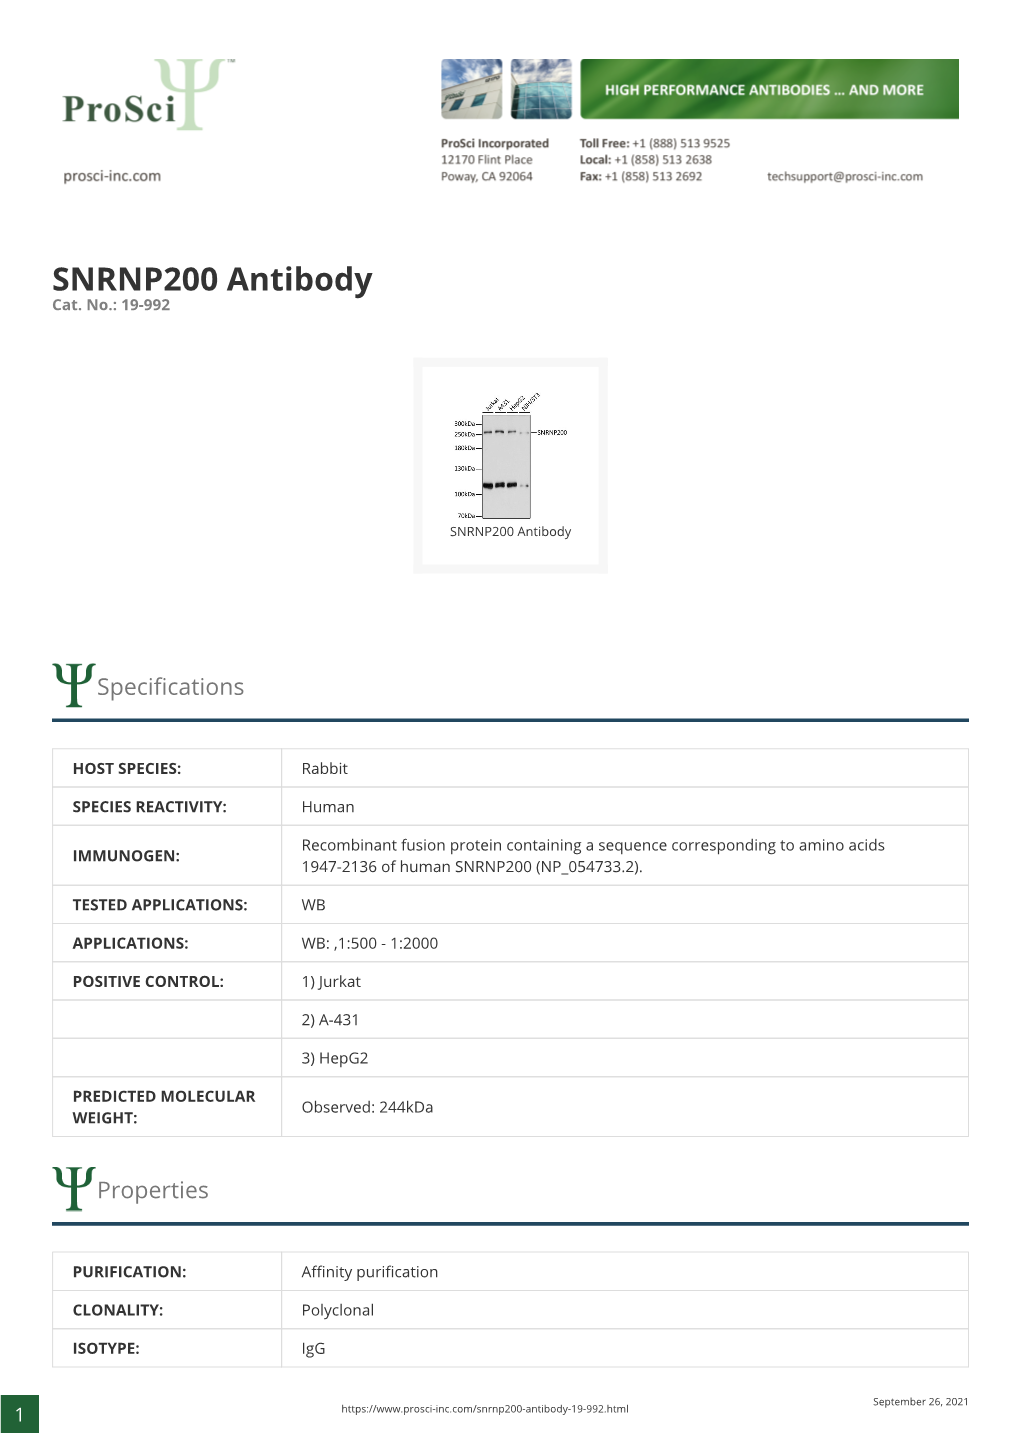 SNRNP200 Antibody Cat